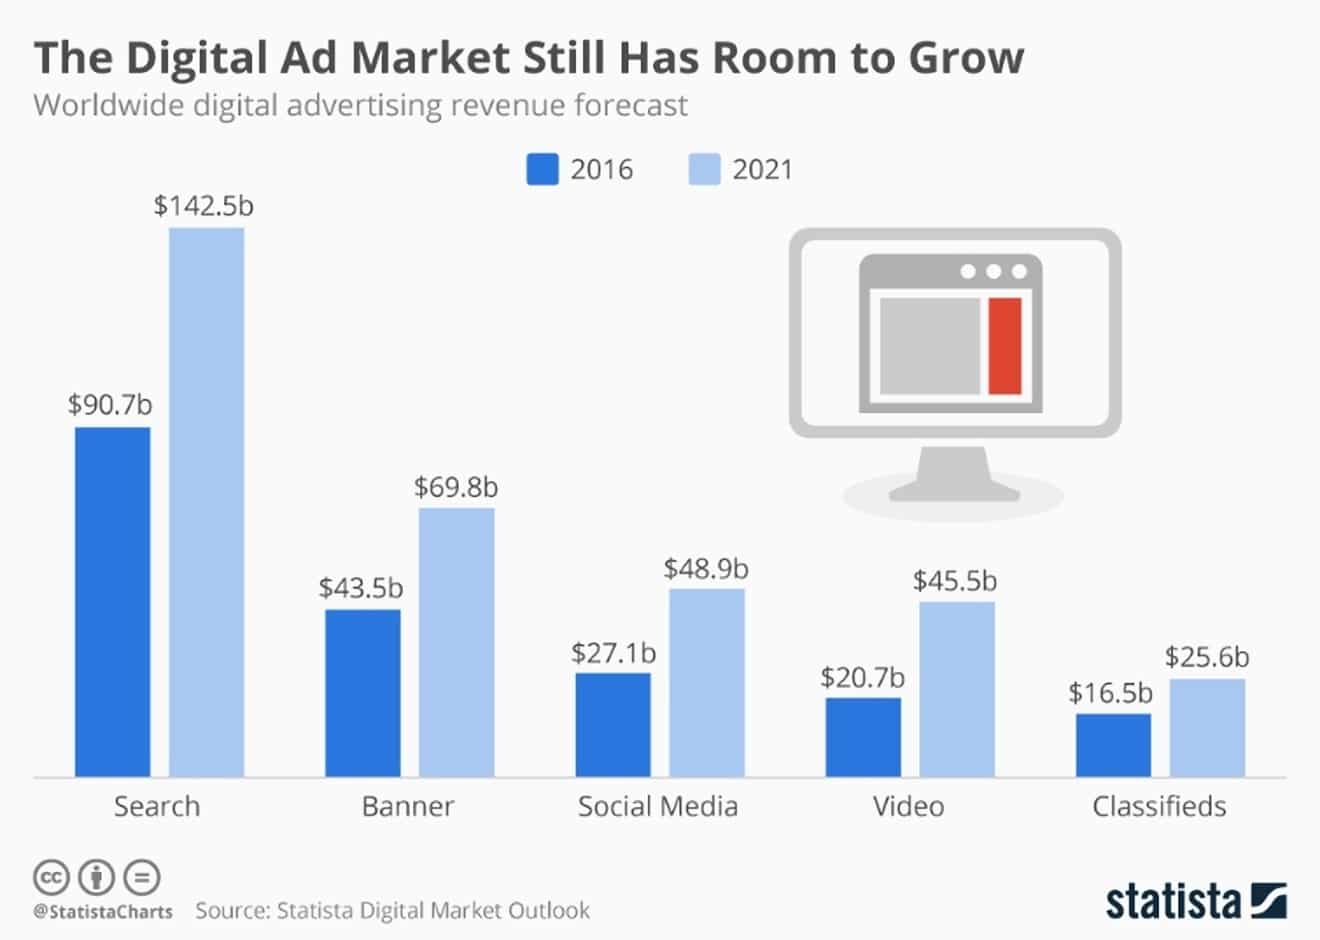 Worldwide digital advertising revenue forecast